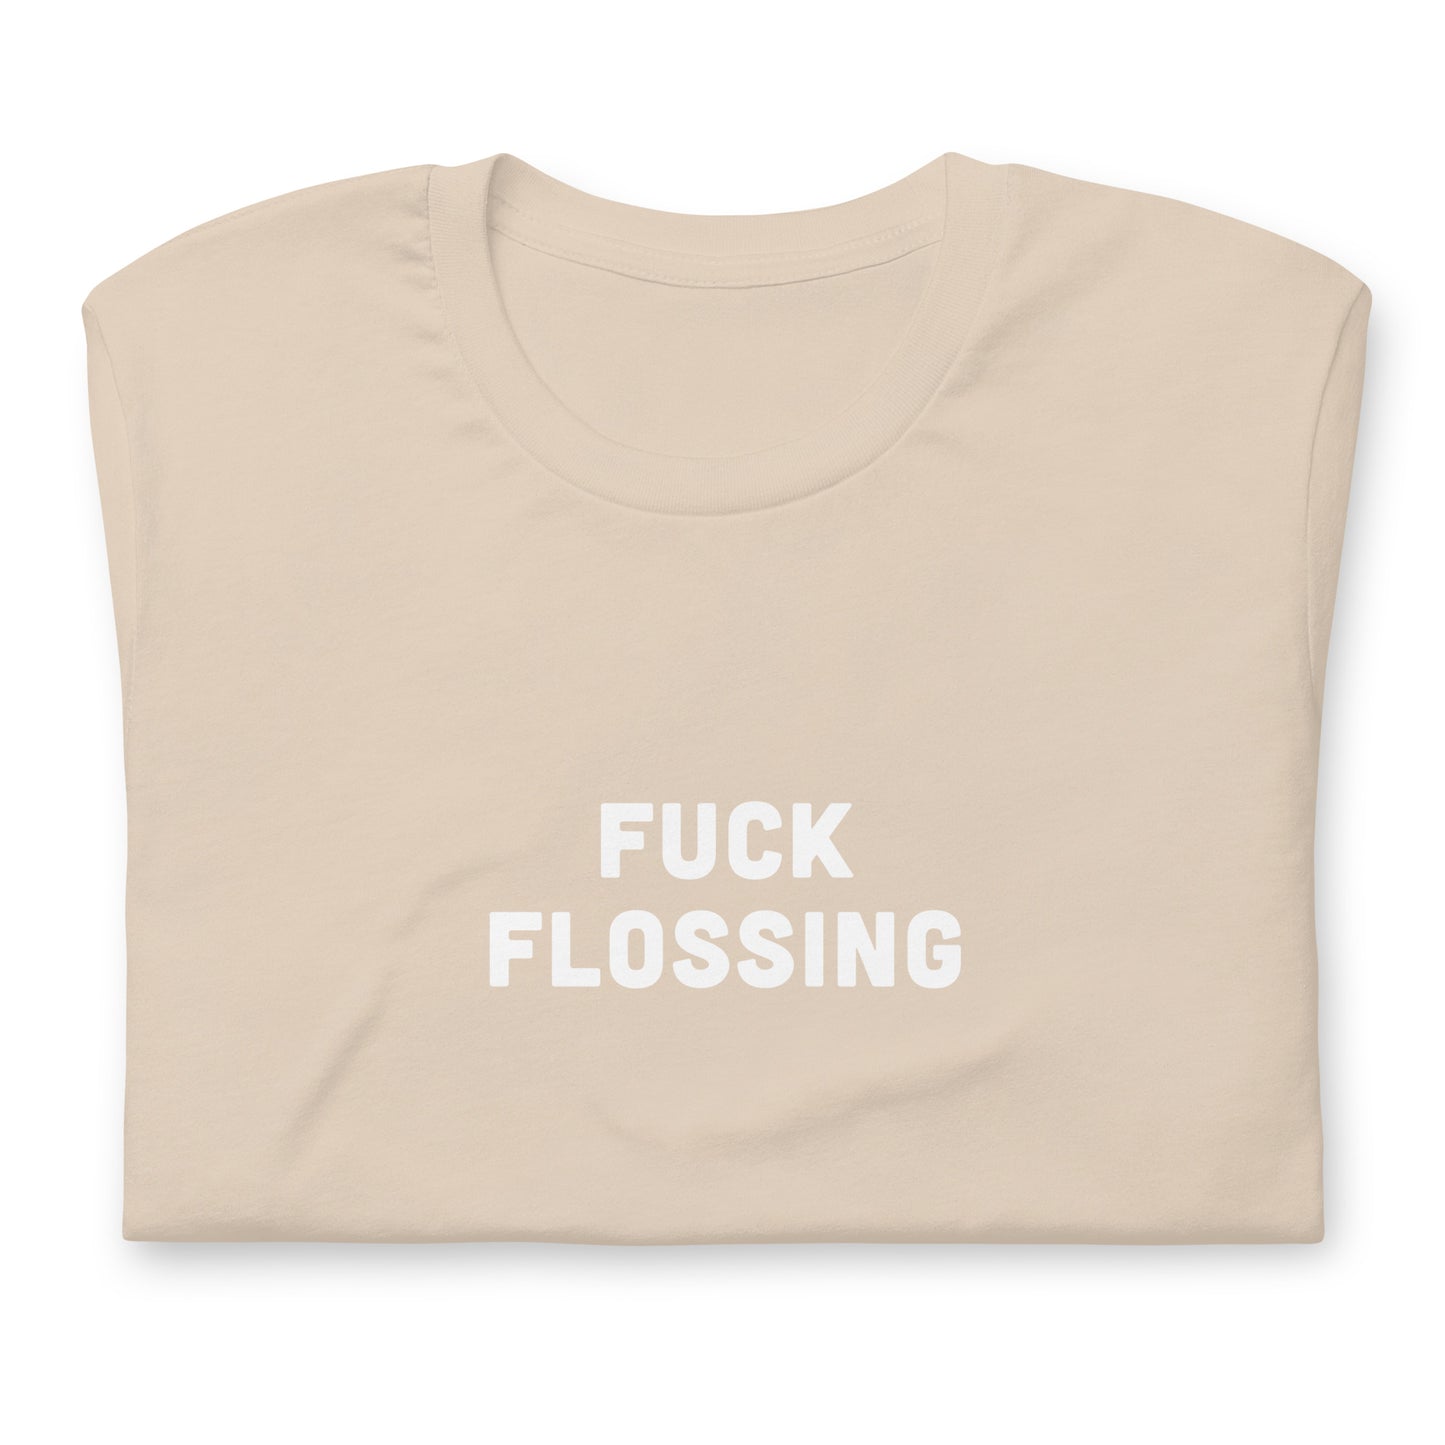 Fuck Flossing T-Shirt Size L Color Asphalt